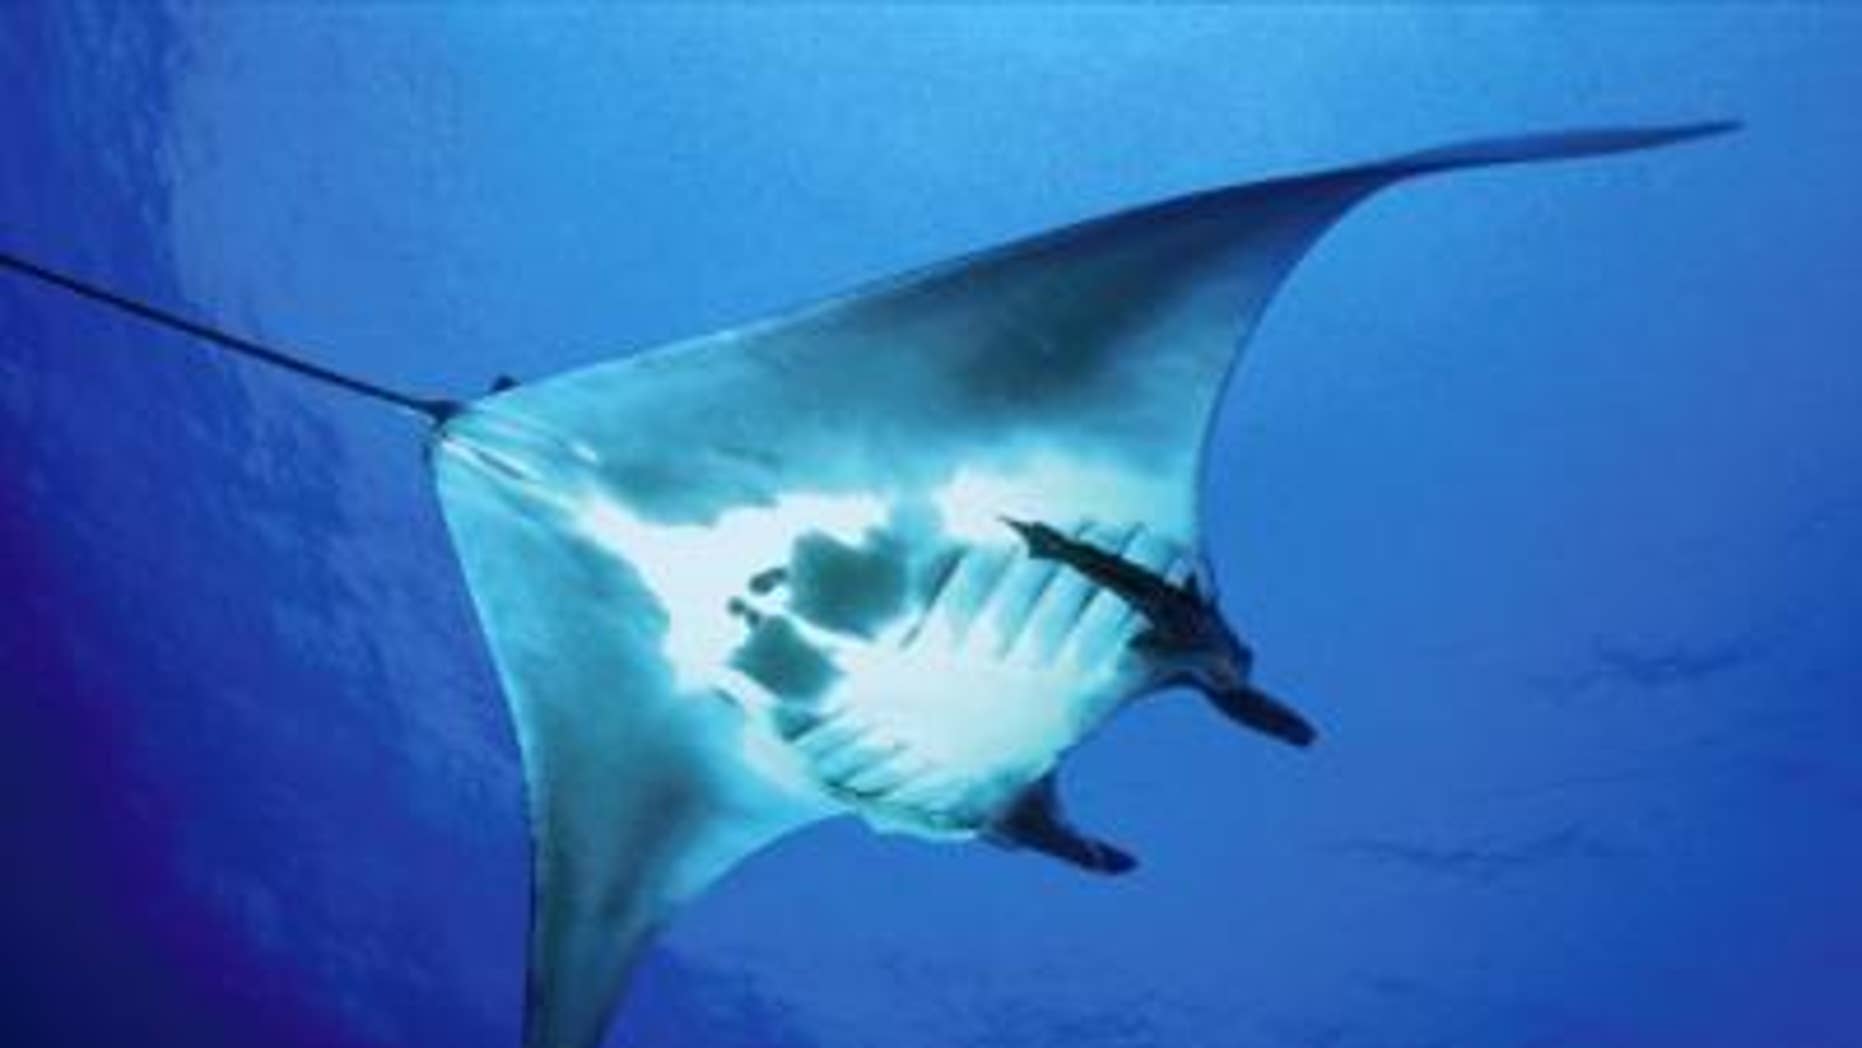 are manta rays dangerous